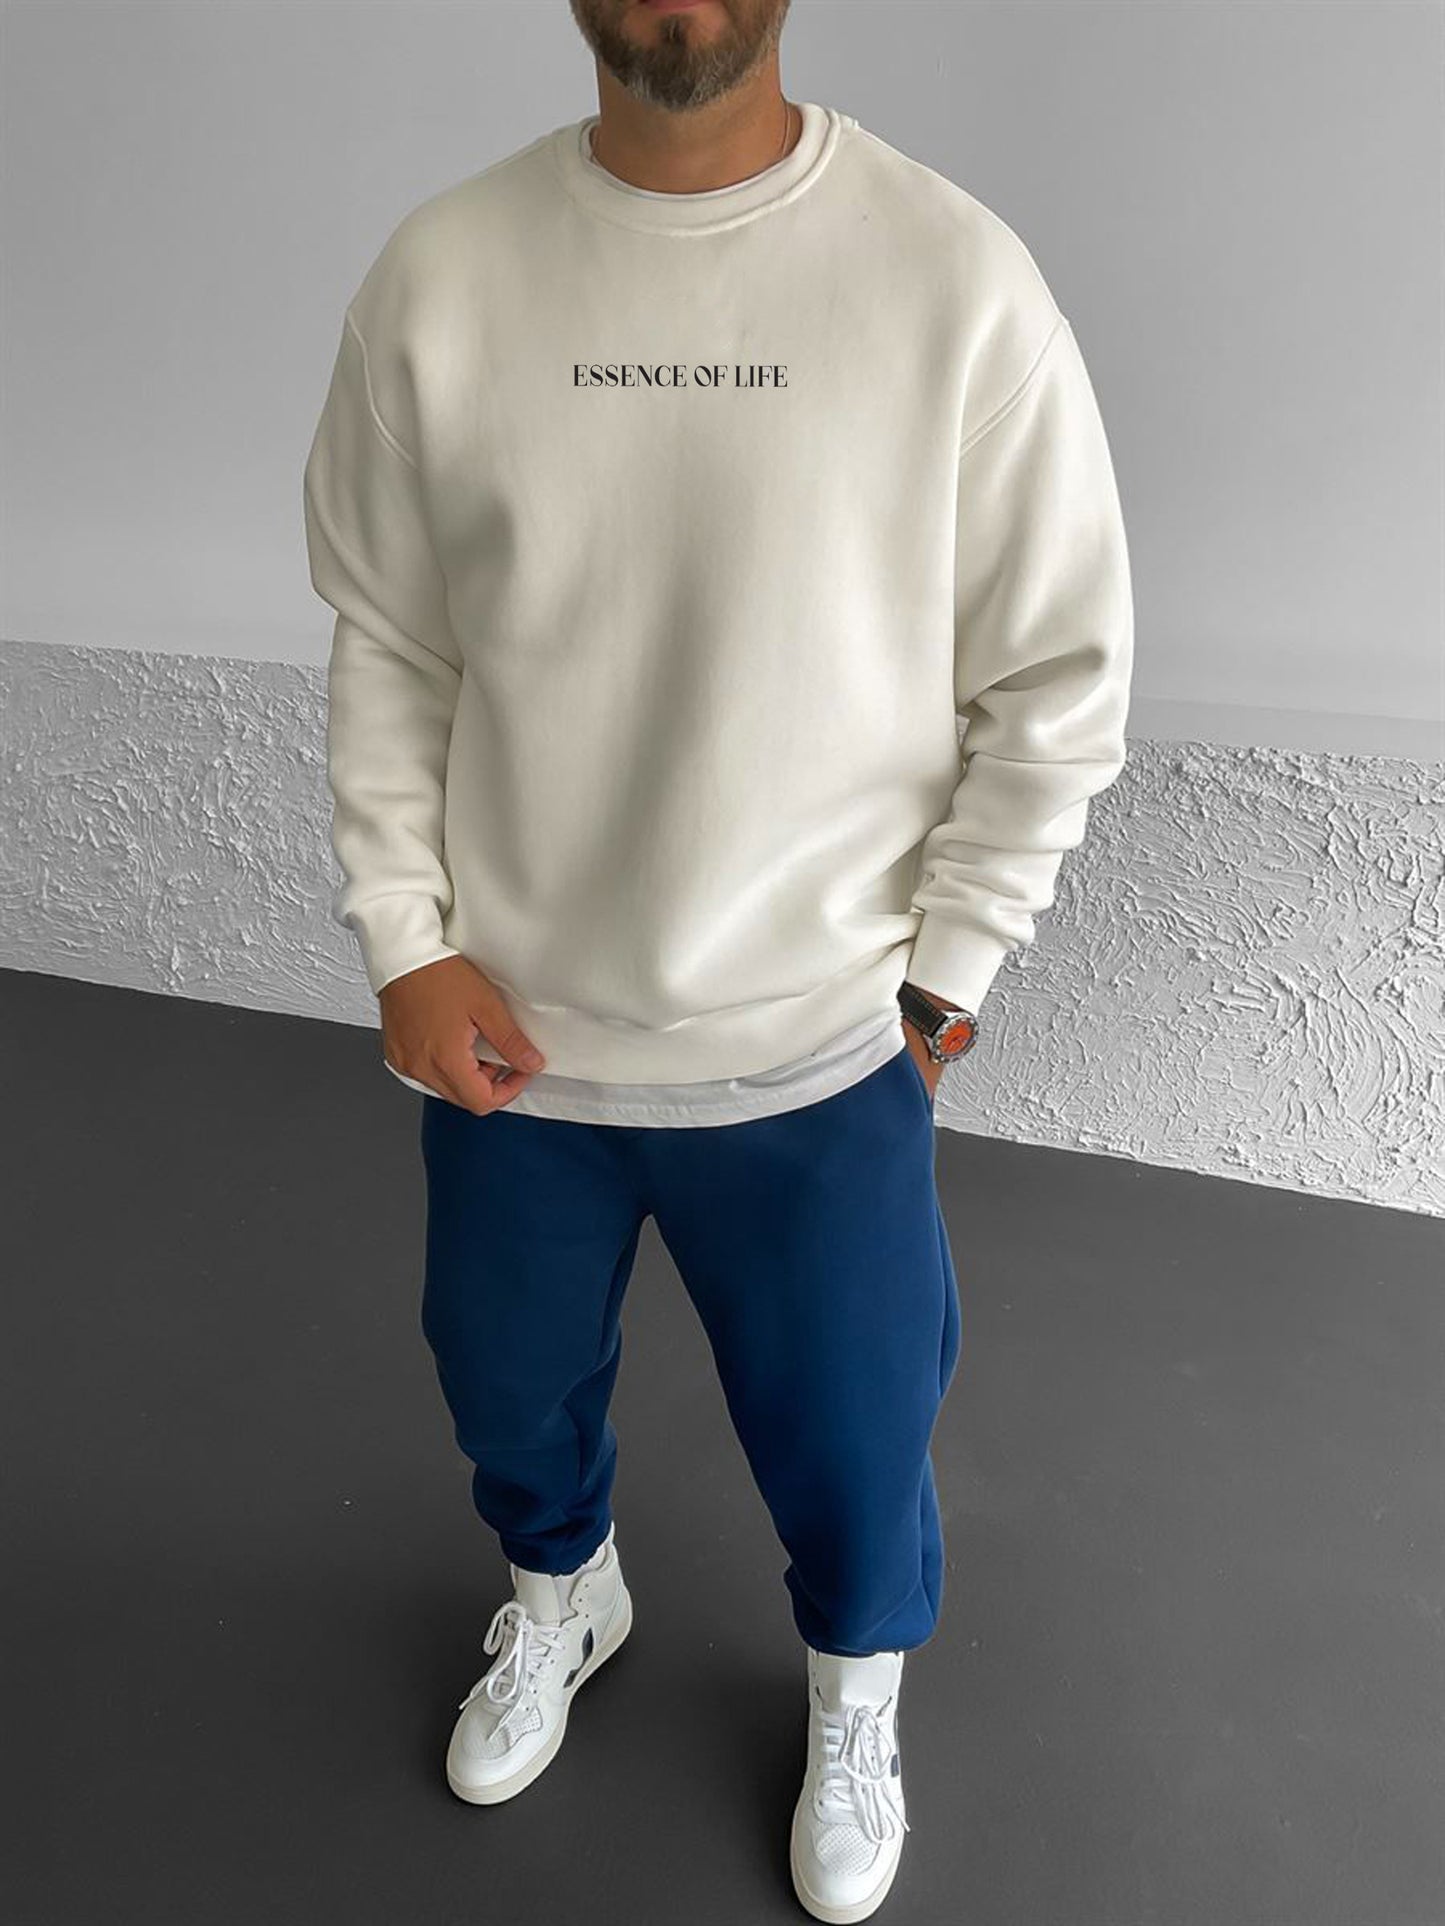 Off-White "Essence" Printed Oversize Sweatshirt